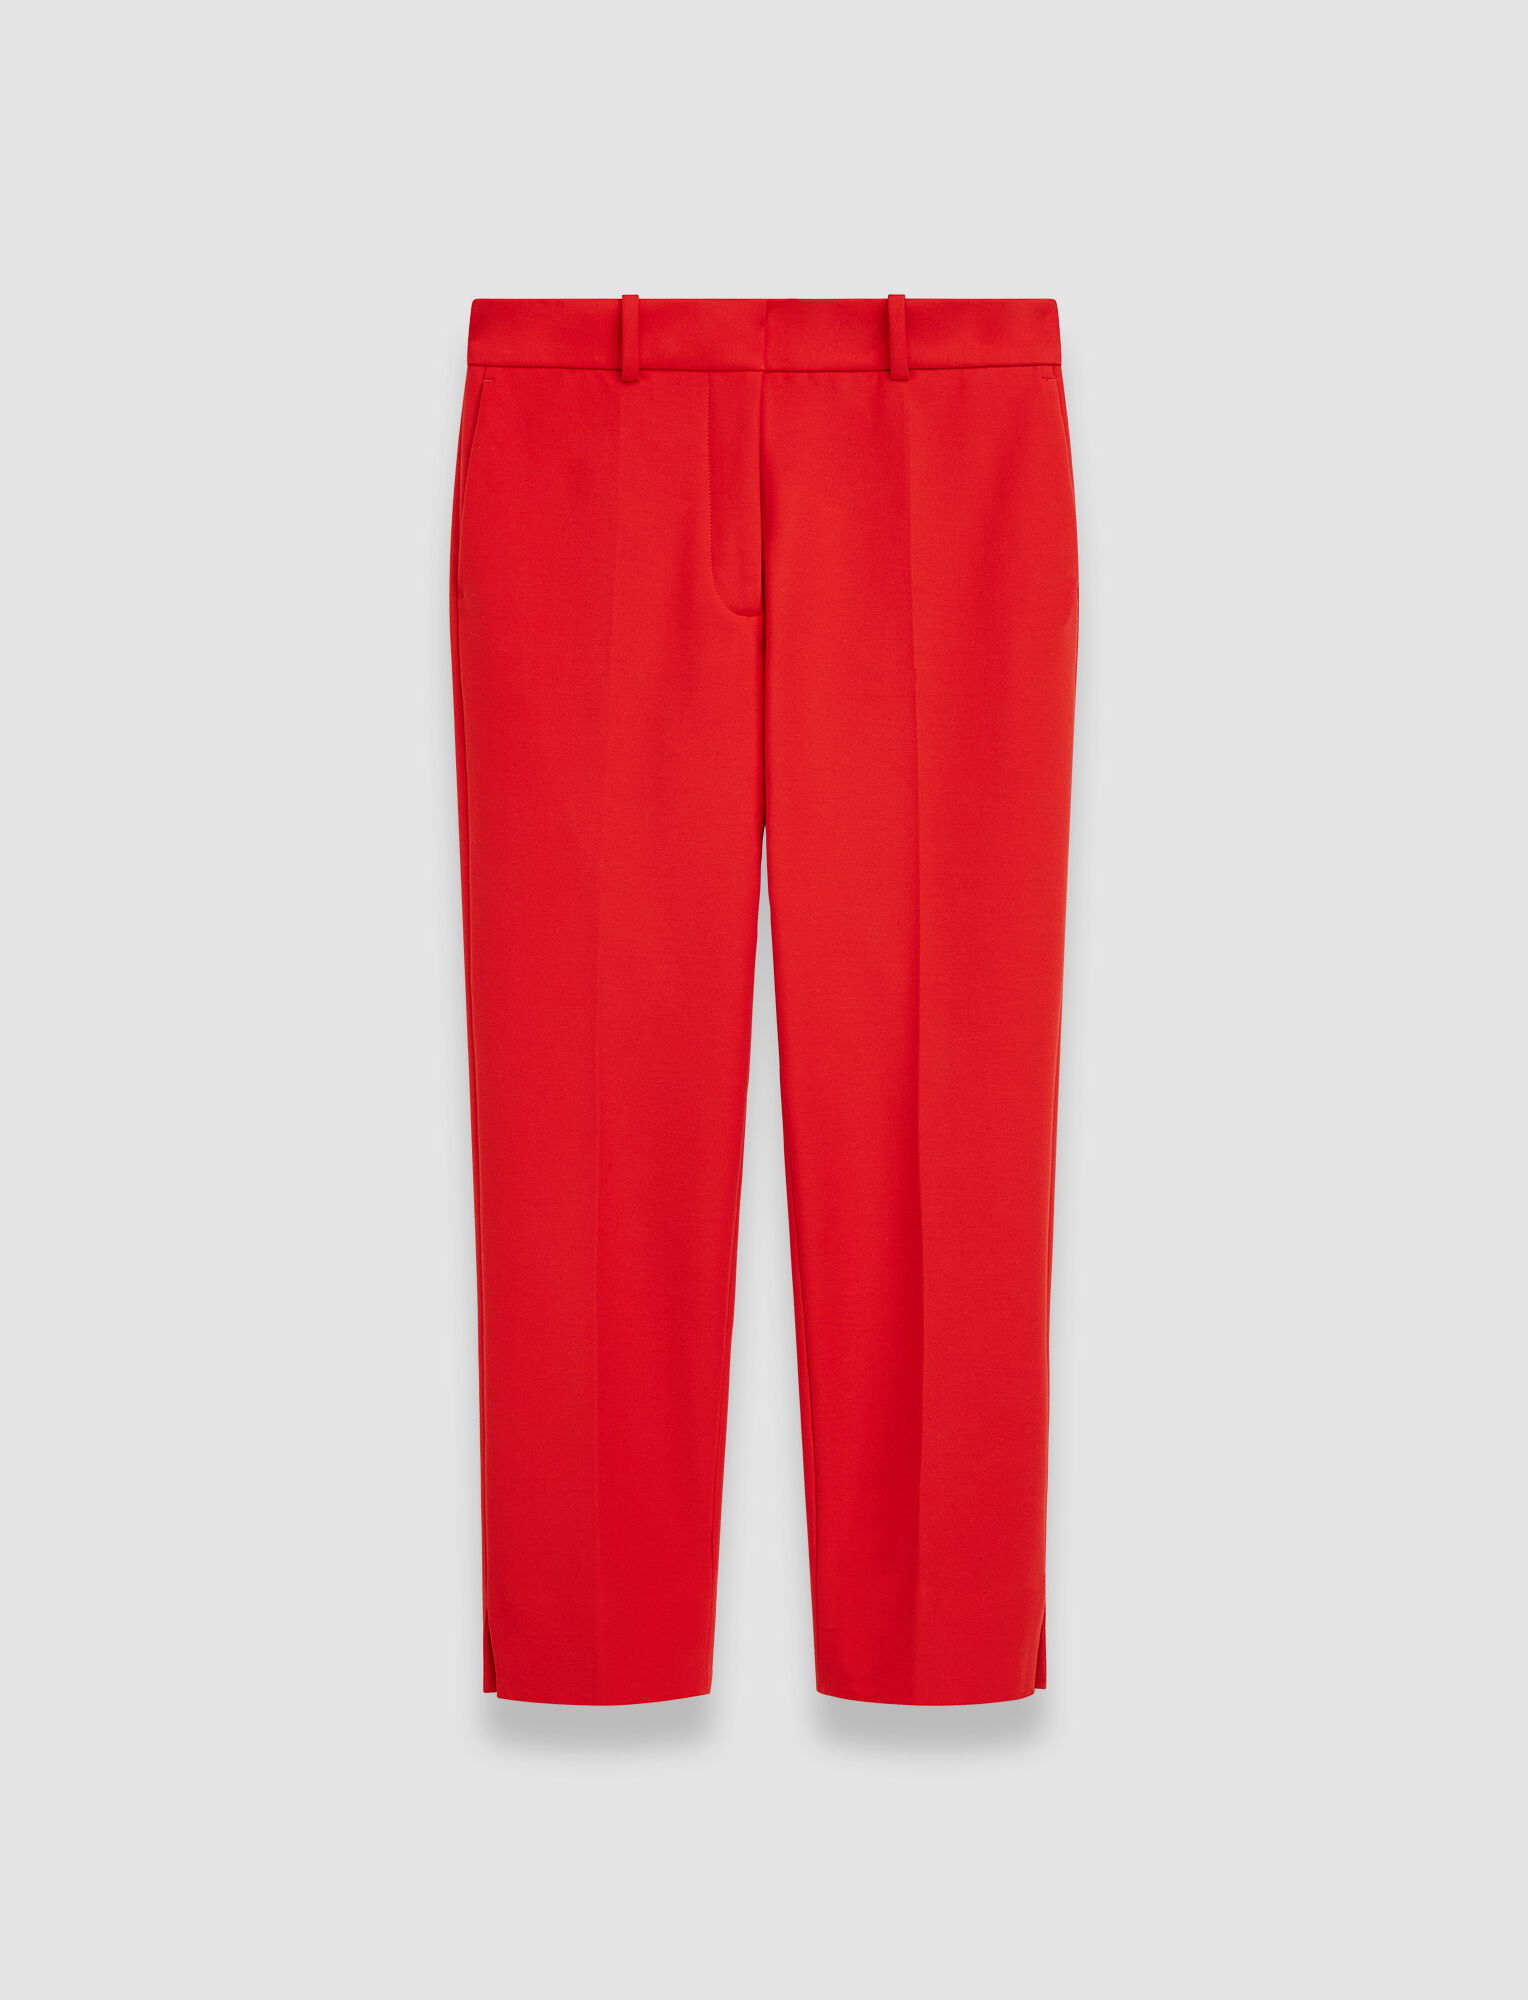 Joseph, Bi-Stretch Toile Bing Court Trousers, in Crimson